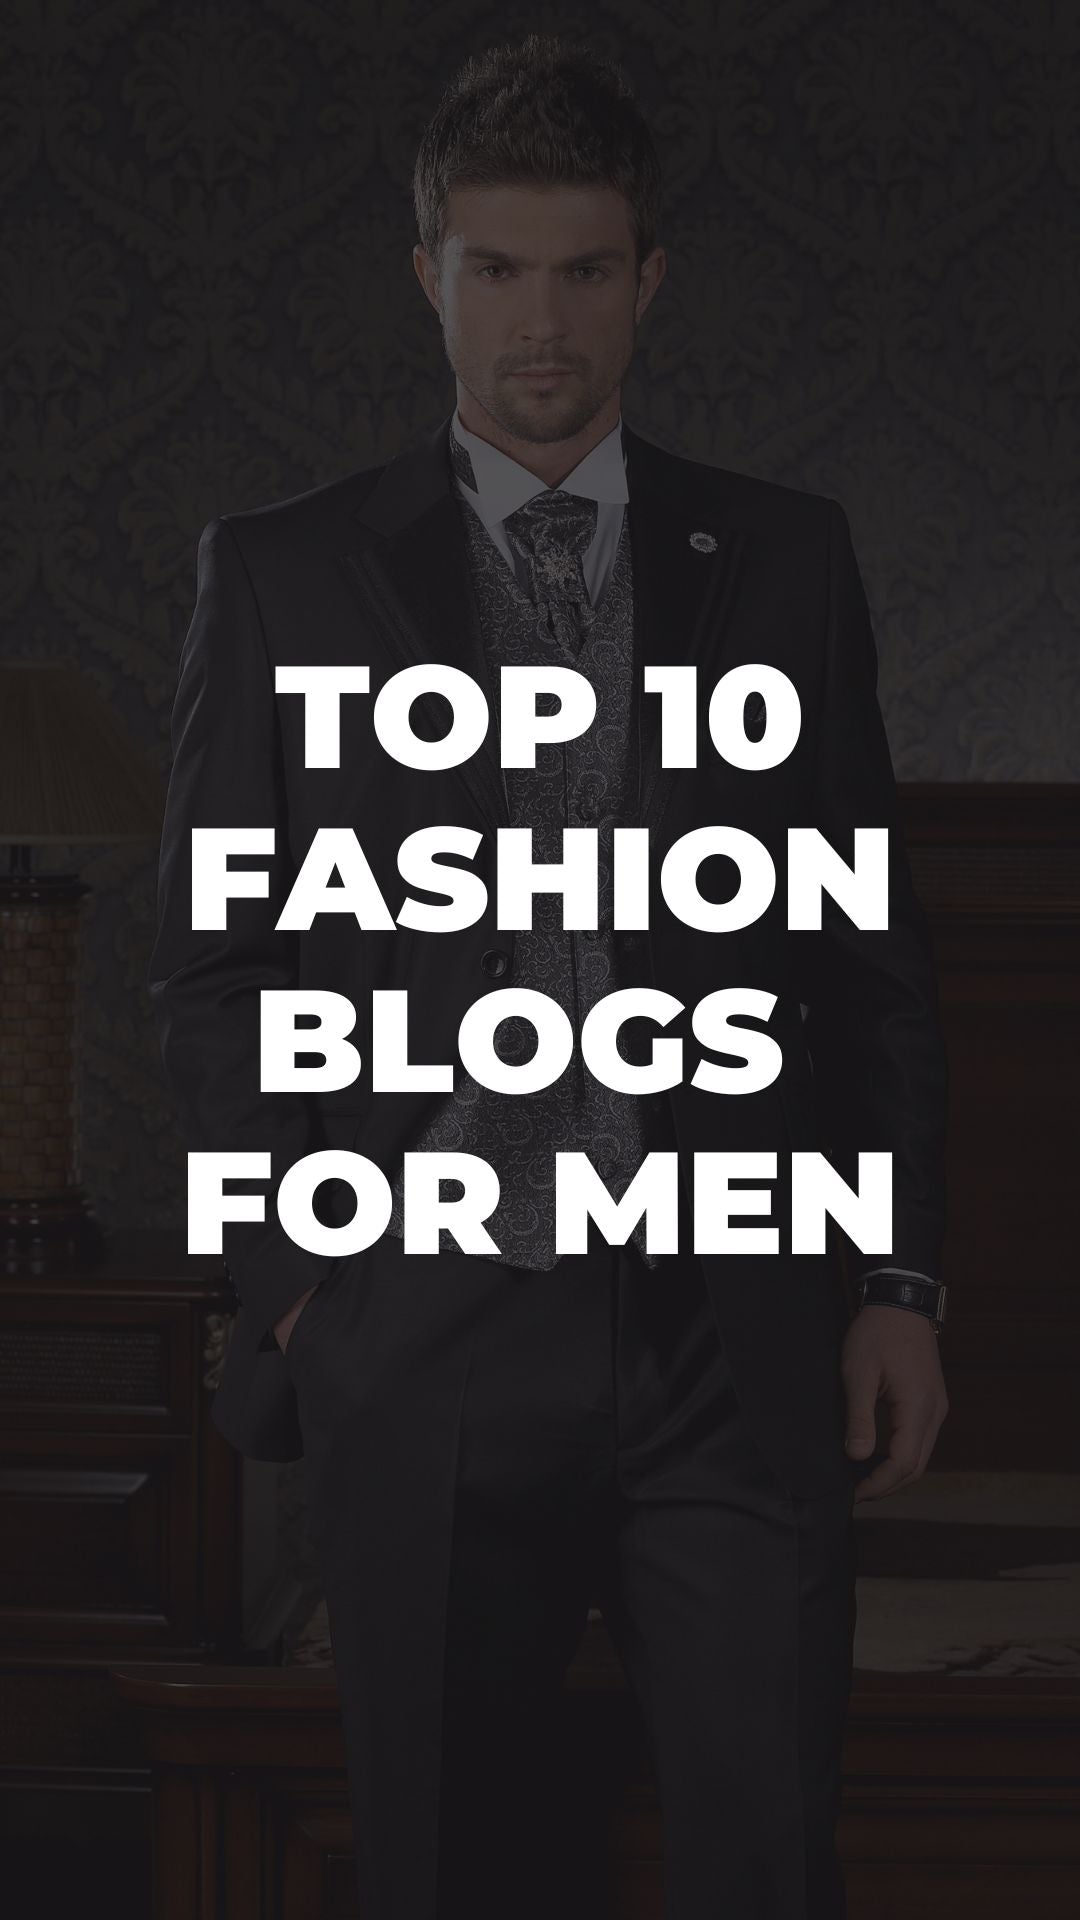 Top fashion blogs for men